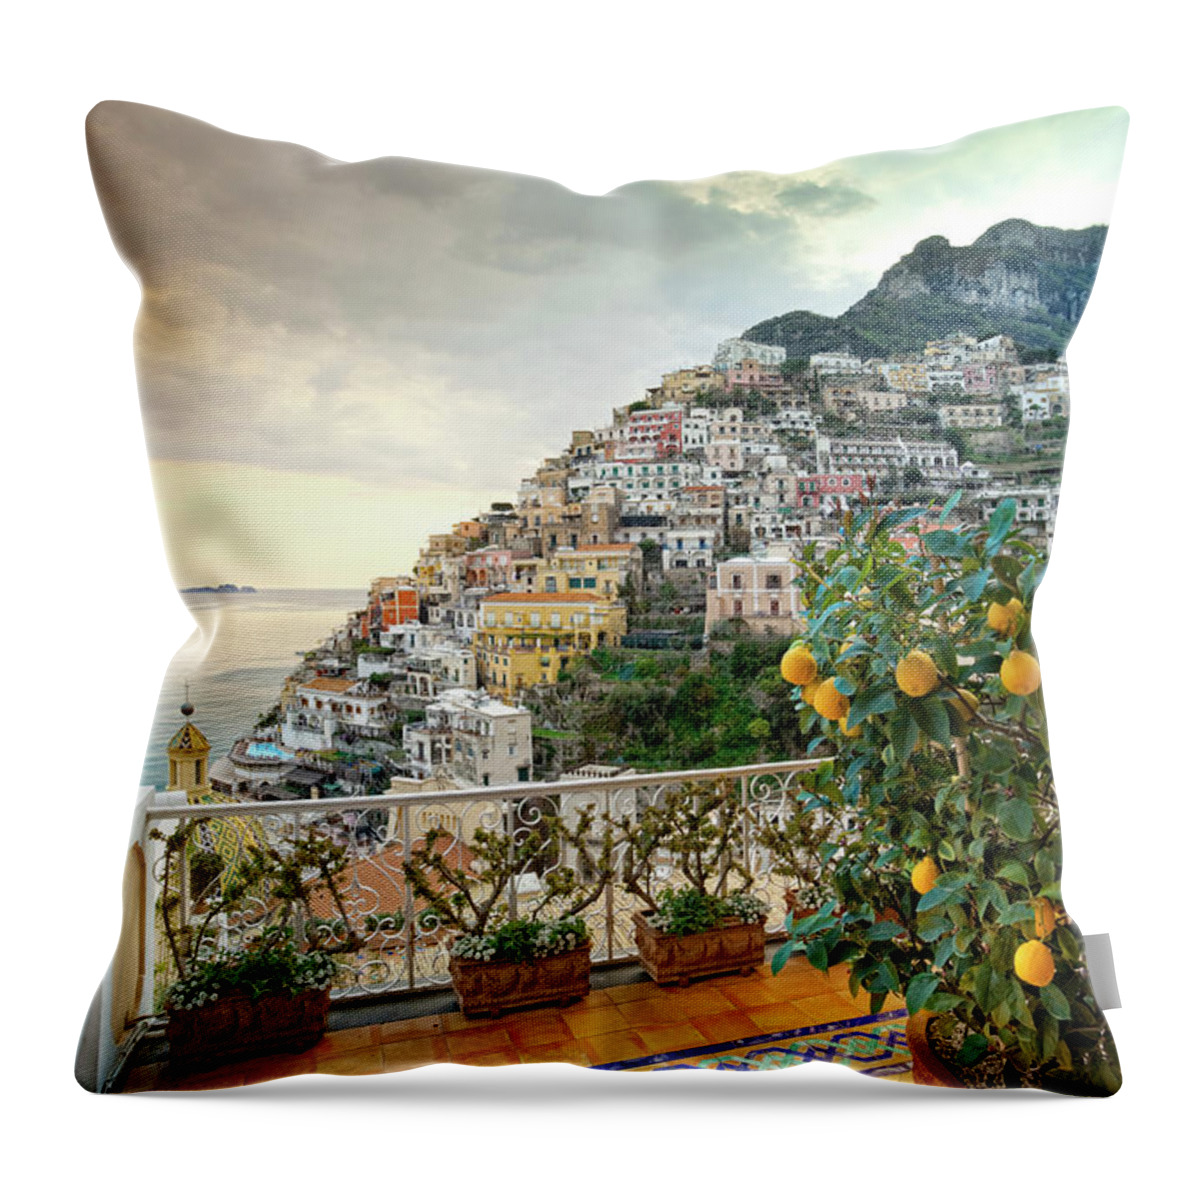 Estock Throw Pillow featuring the digital art Positano, Amalfi Coast, Italy by Pietro Canali